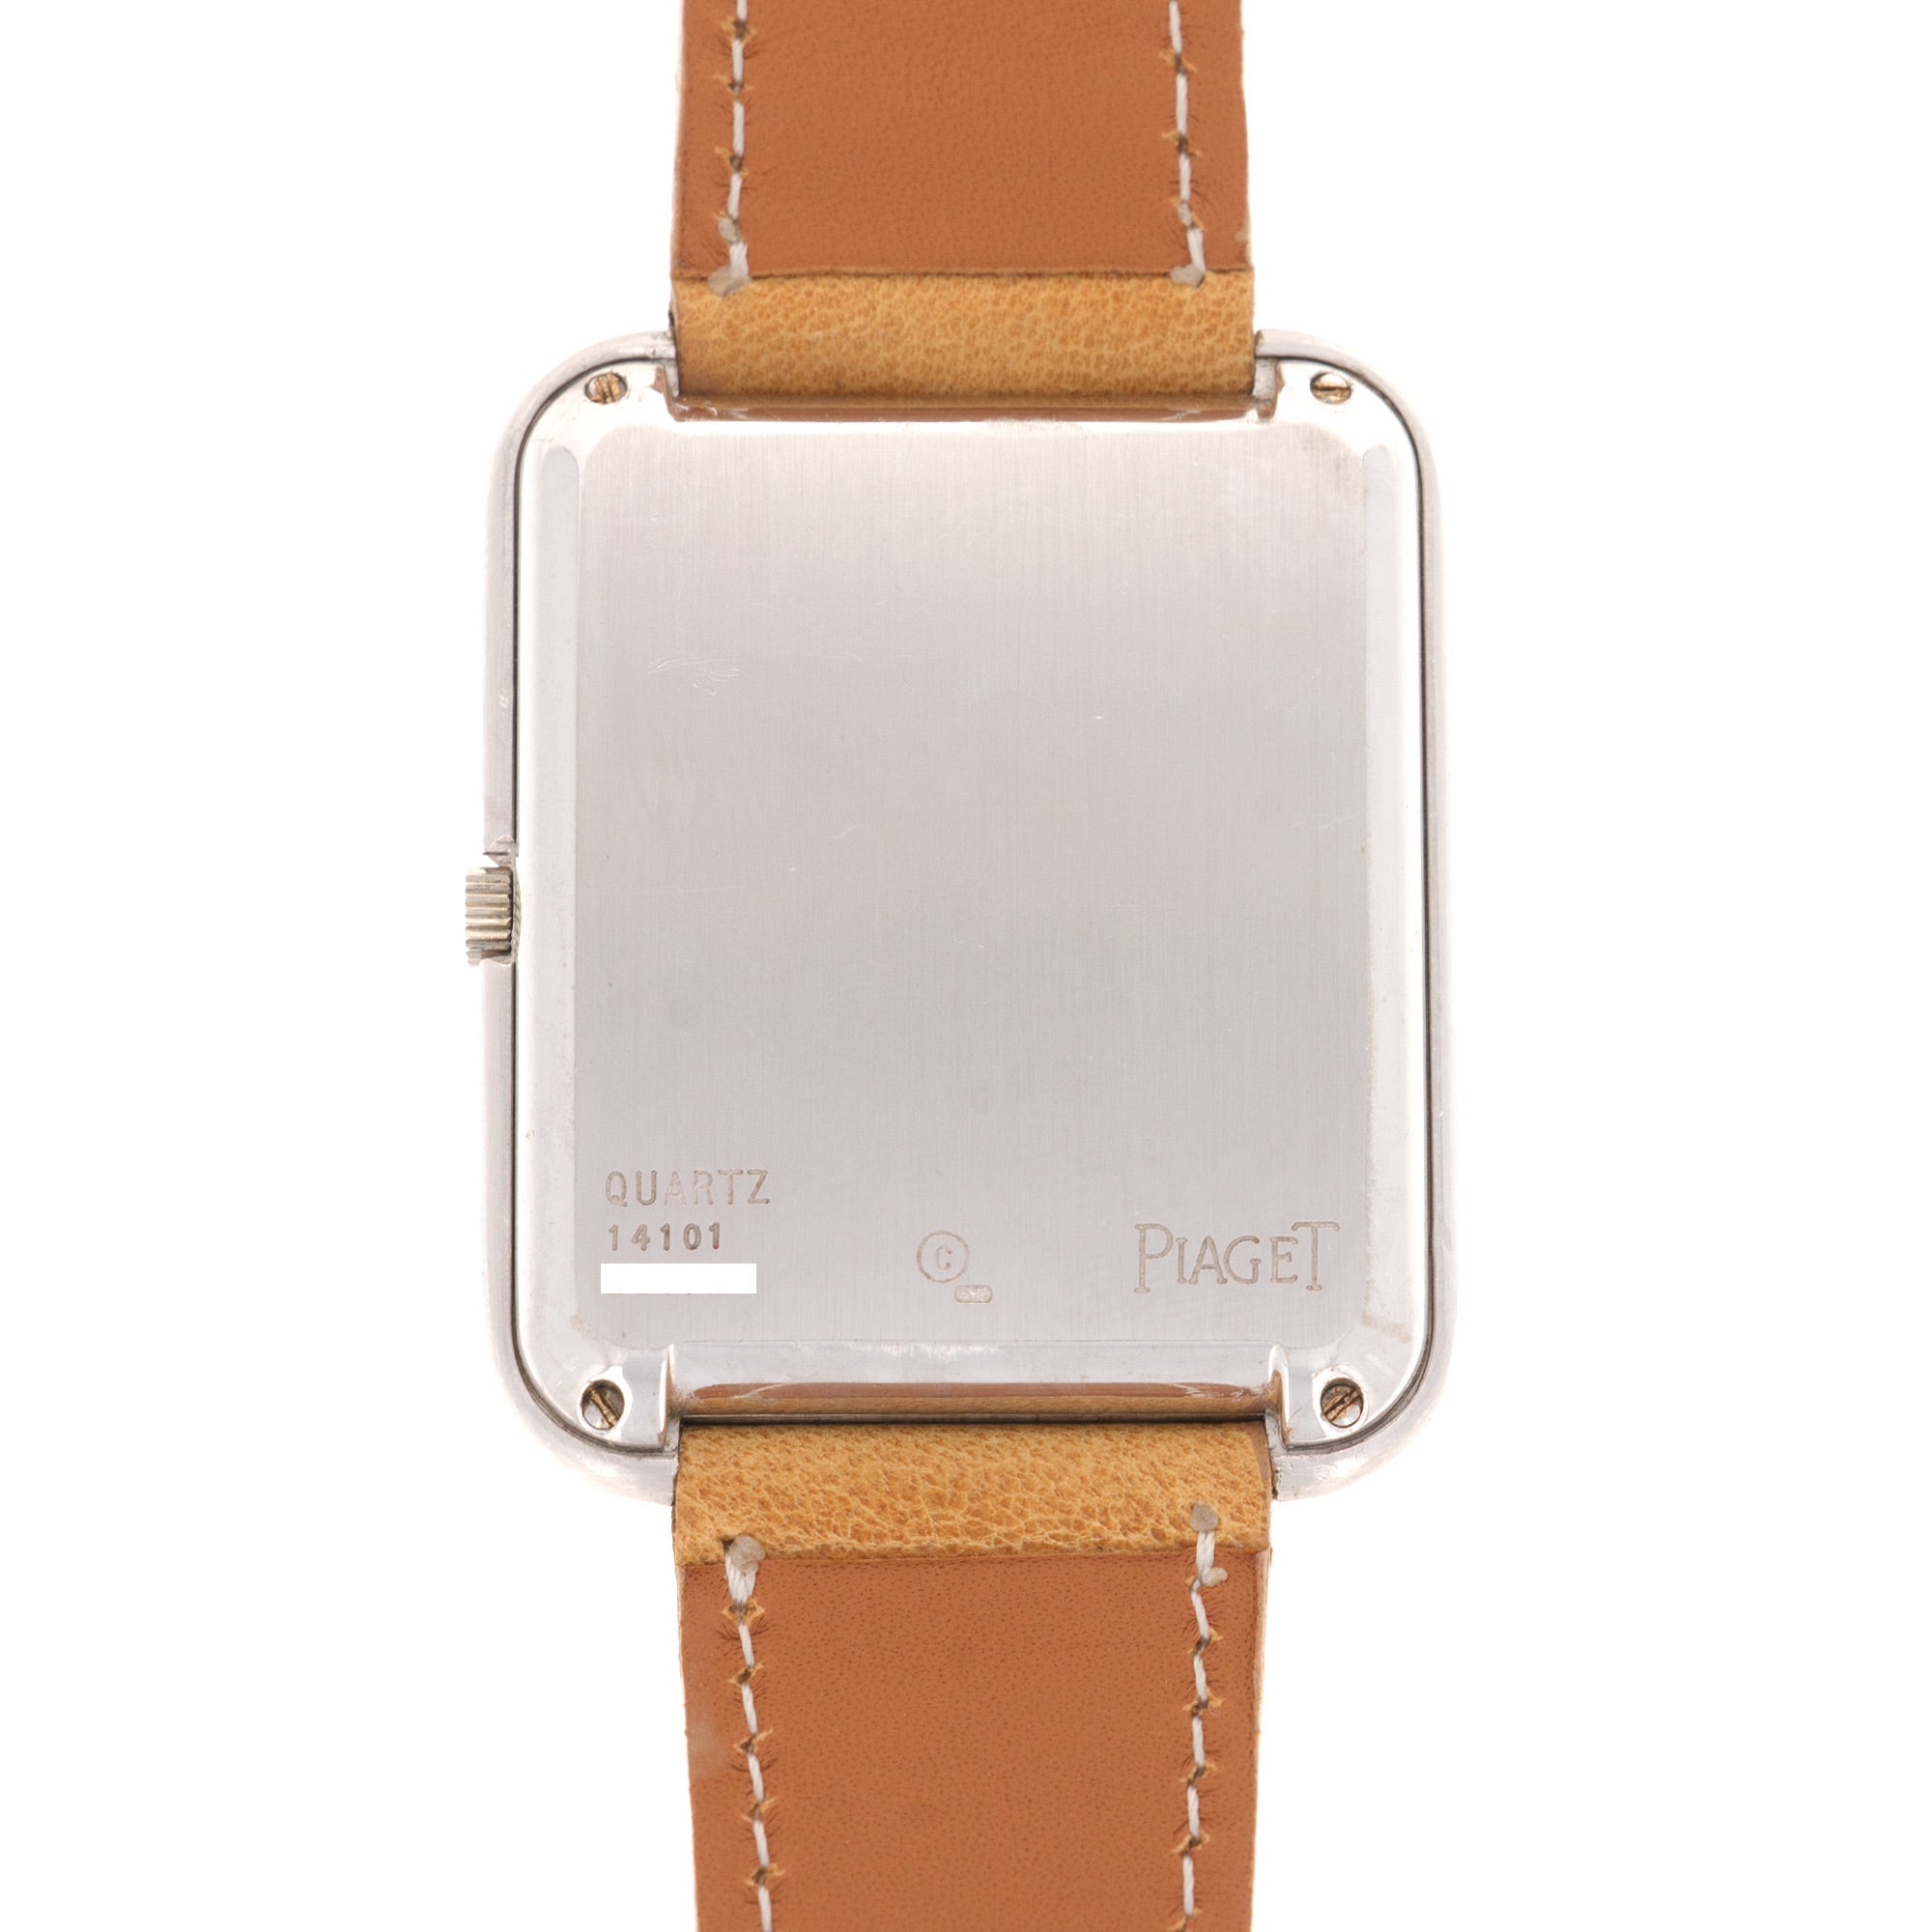 Piaget - Piaget White Gold Beta 21 Watch Ref. 14101 - The Keystone Watches